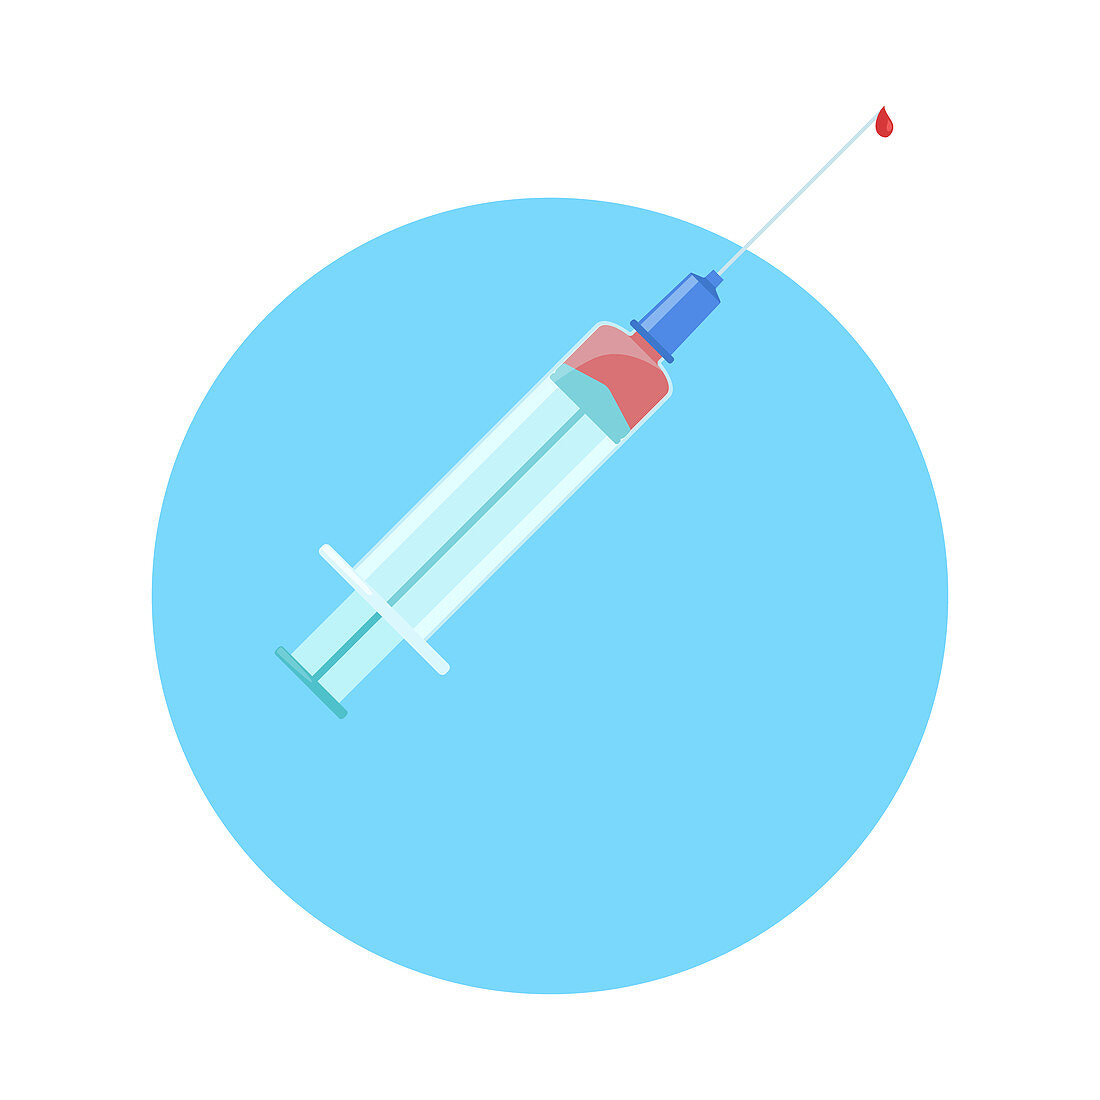 Syringe with blood, illustration